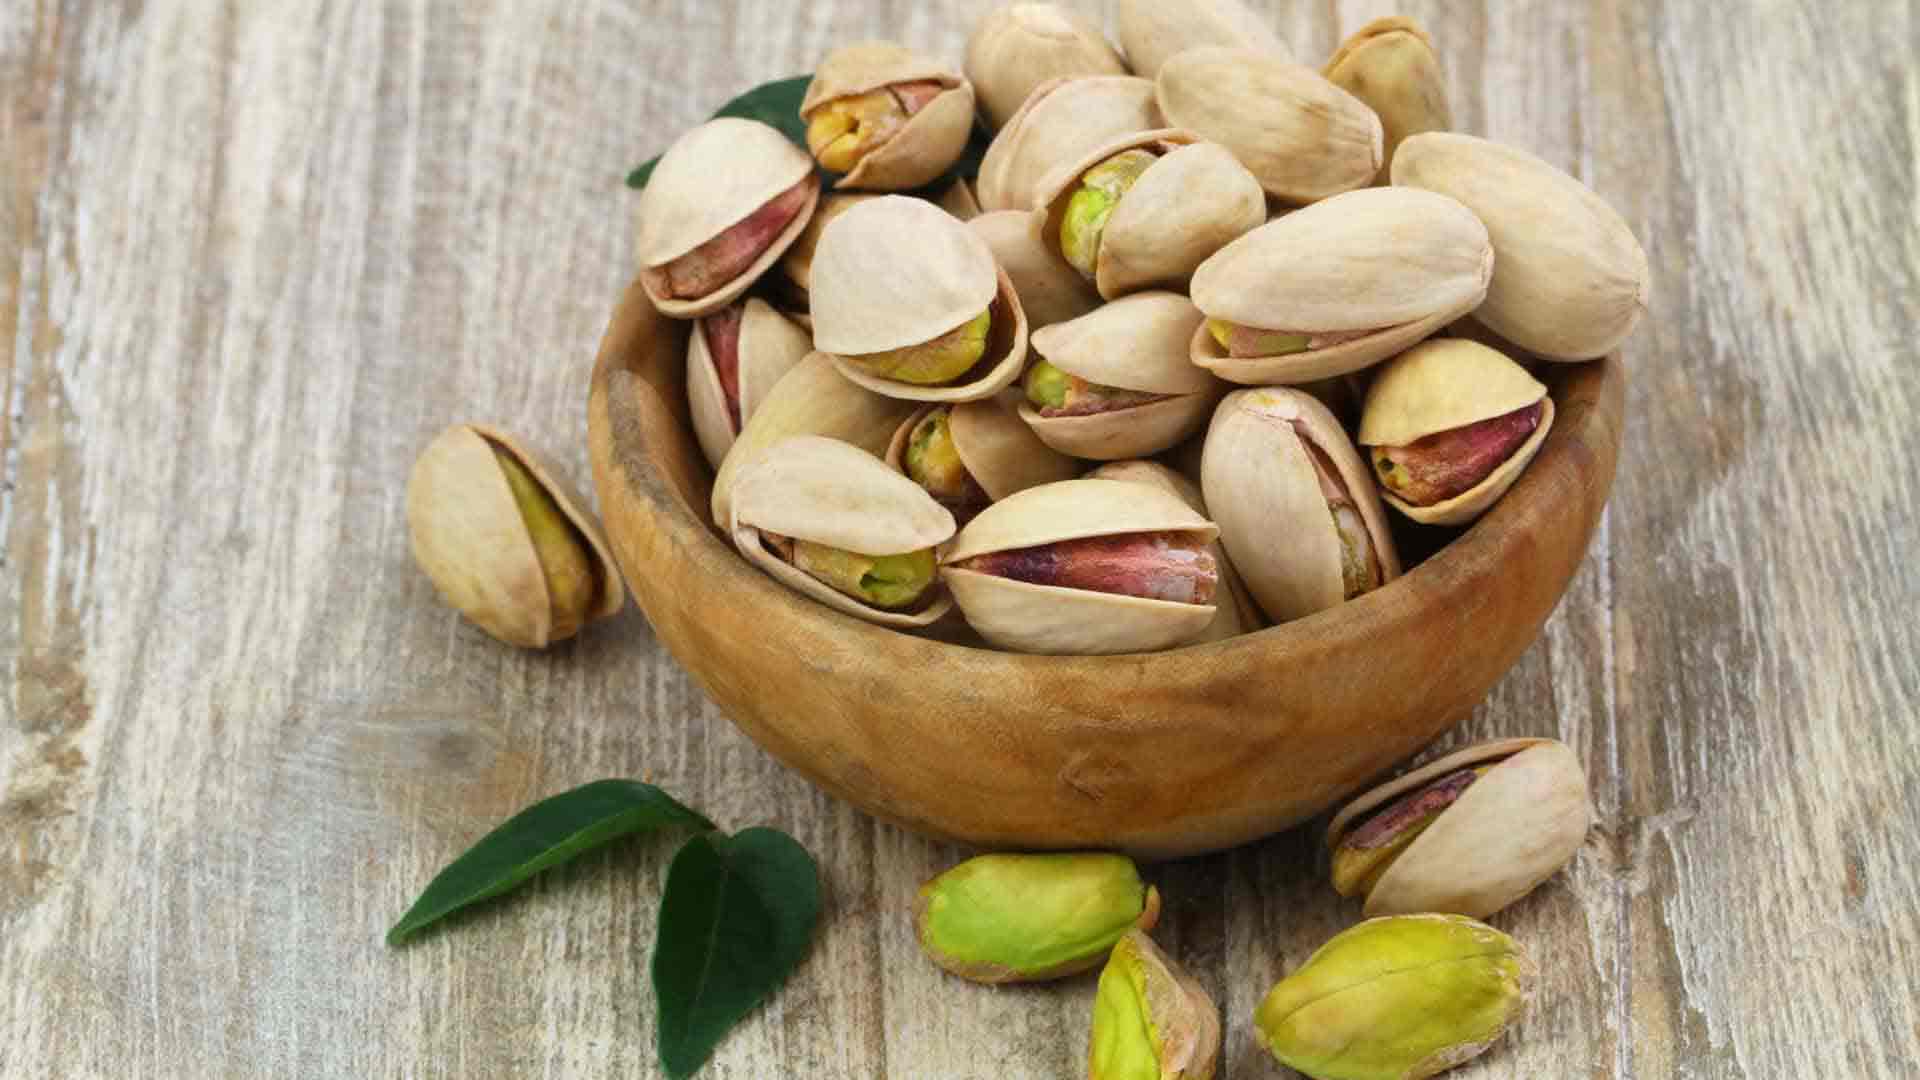 The Purchase Price of fudge pistachio + Advantages And Disadvantages